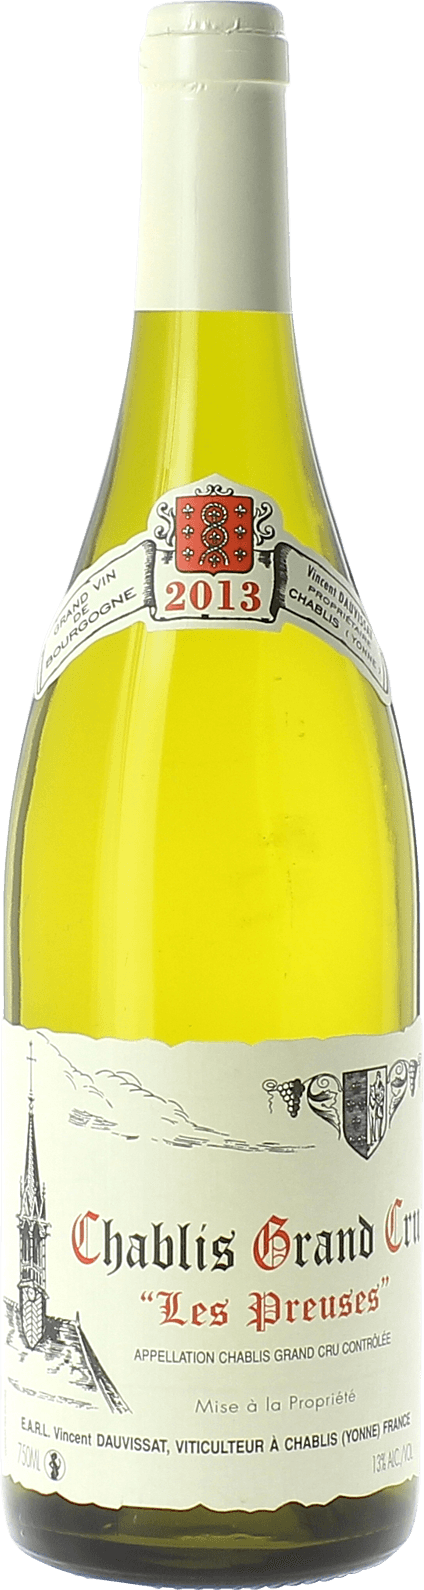 Chablis grand cru les preuses 2016 Domaine DAUVISSAT, Bourgogne blanc